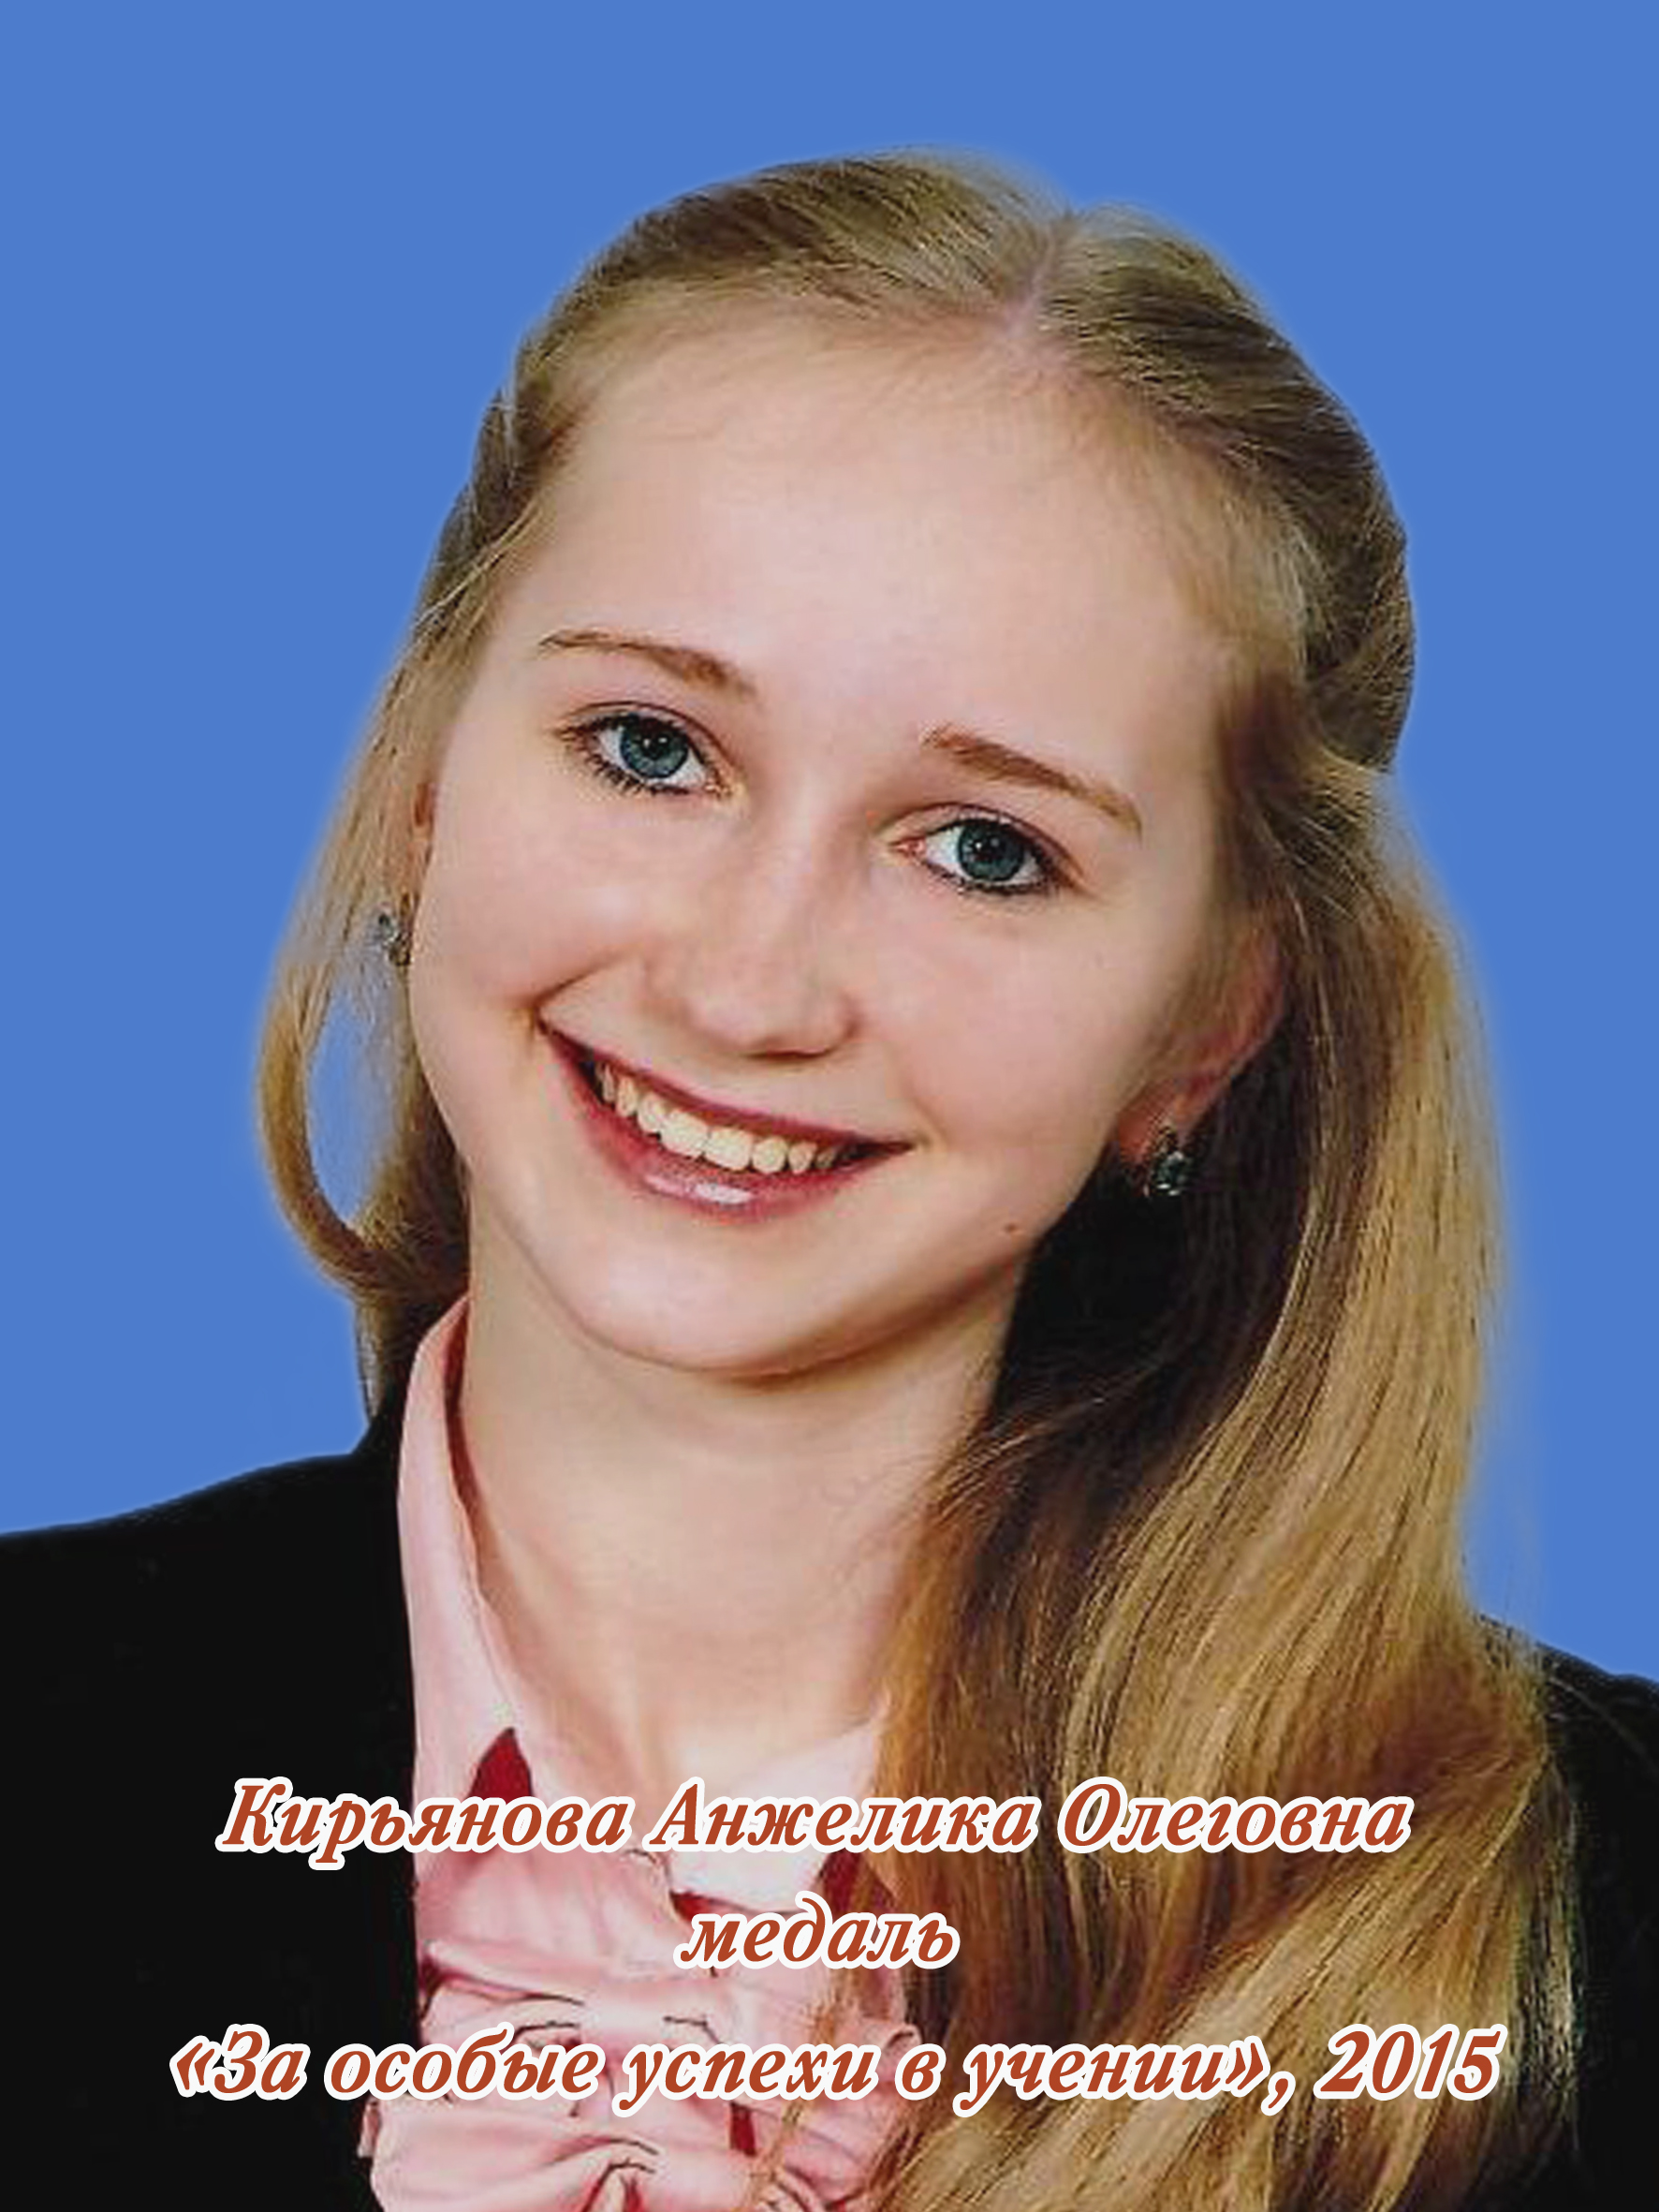 Кирьянова Анжелика Олеговна.